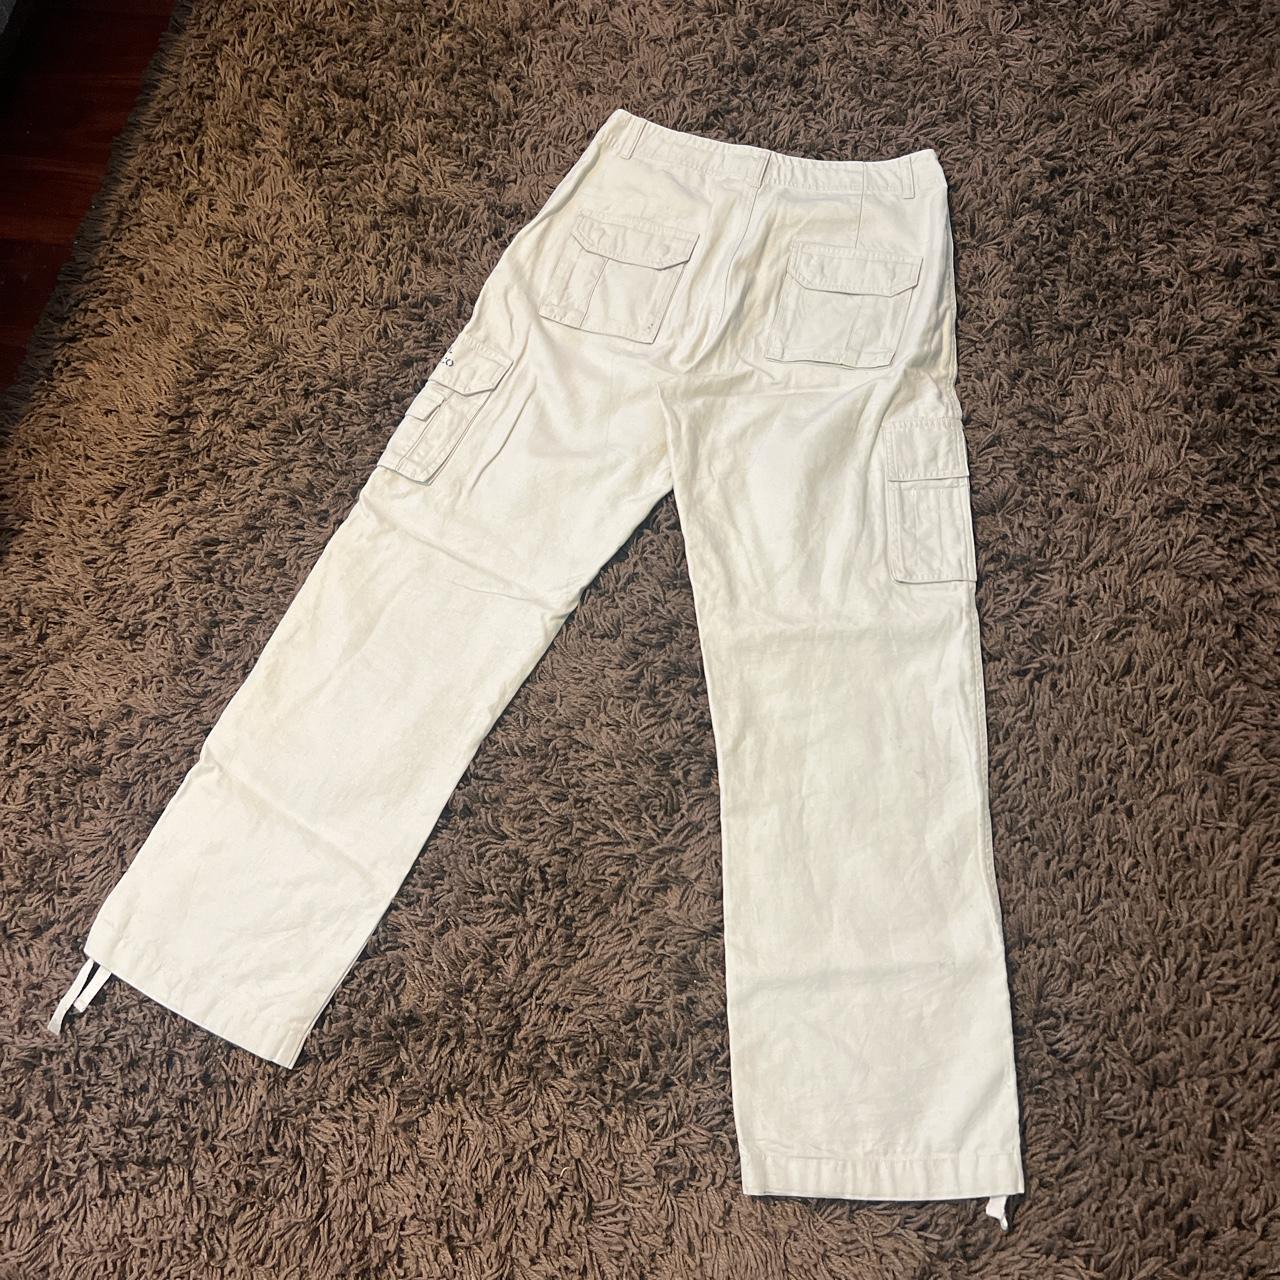 JNCO STYLE CARGO Style Pants Size 30 Beige/White... - Depop